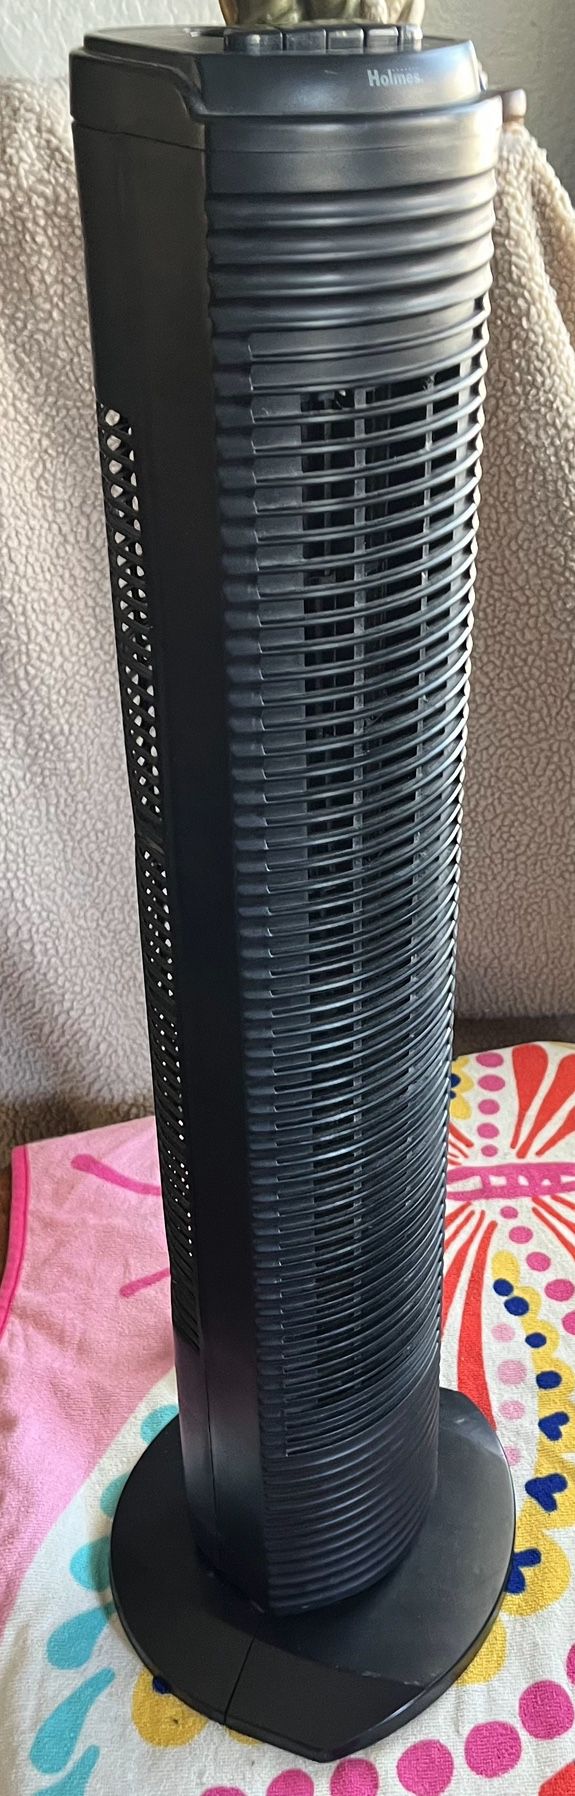 Holmen Ocillating Tower Fan ,Black 31inch